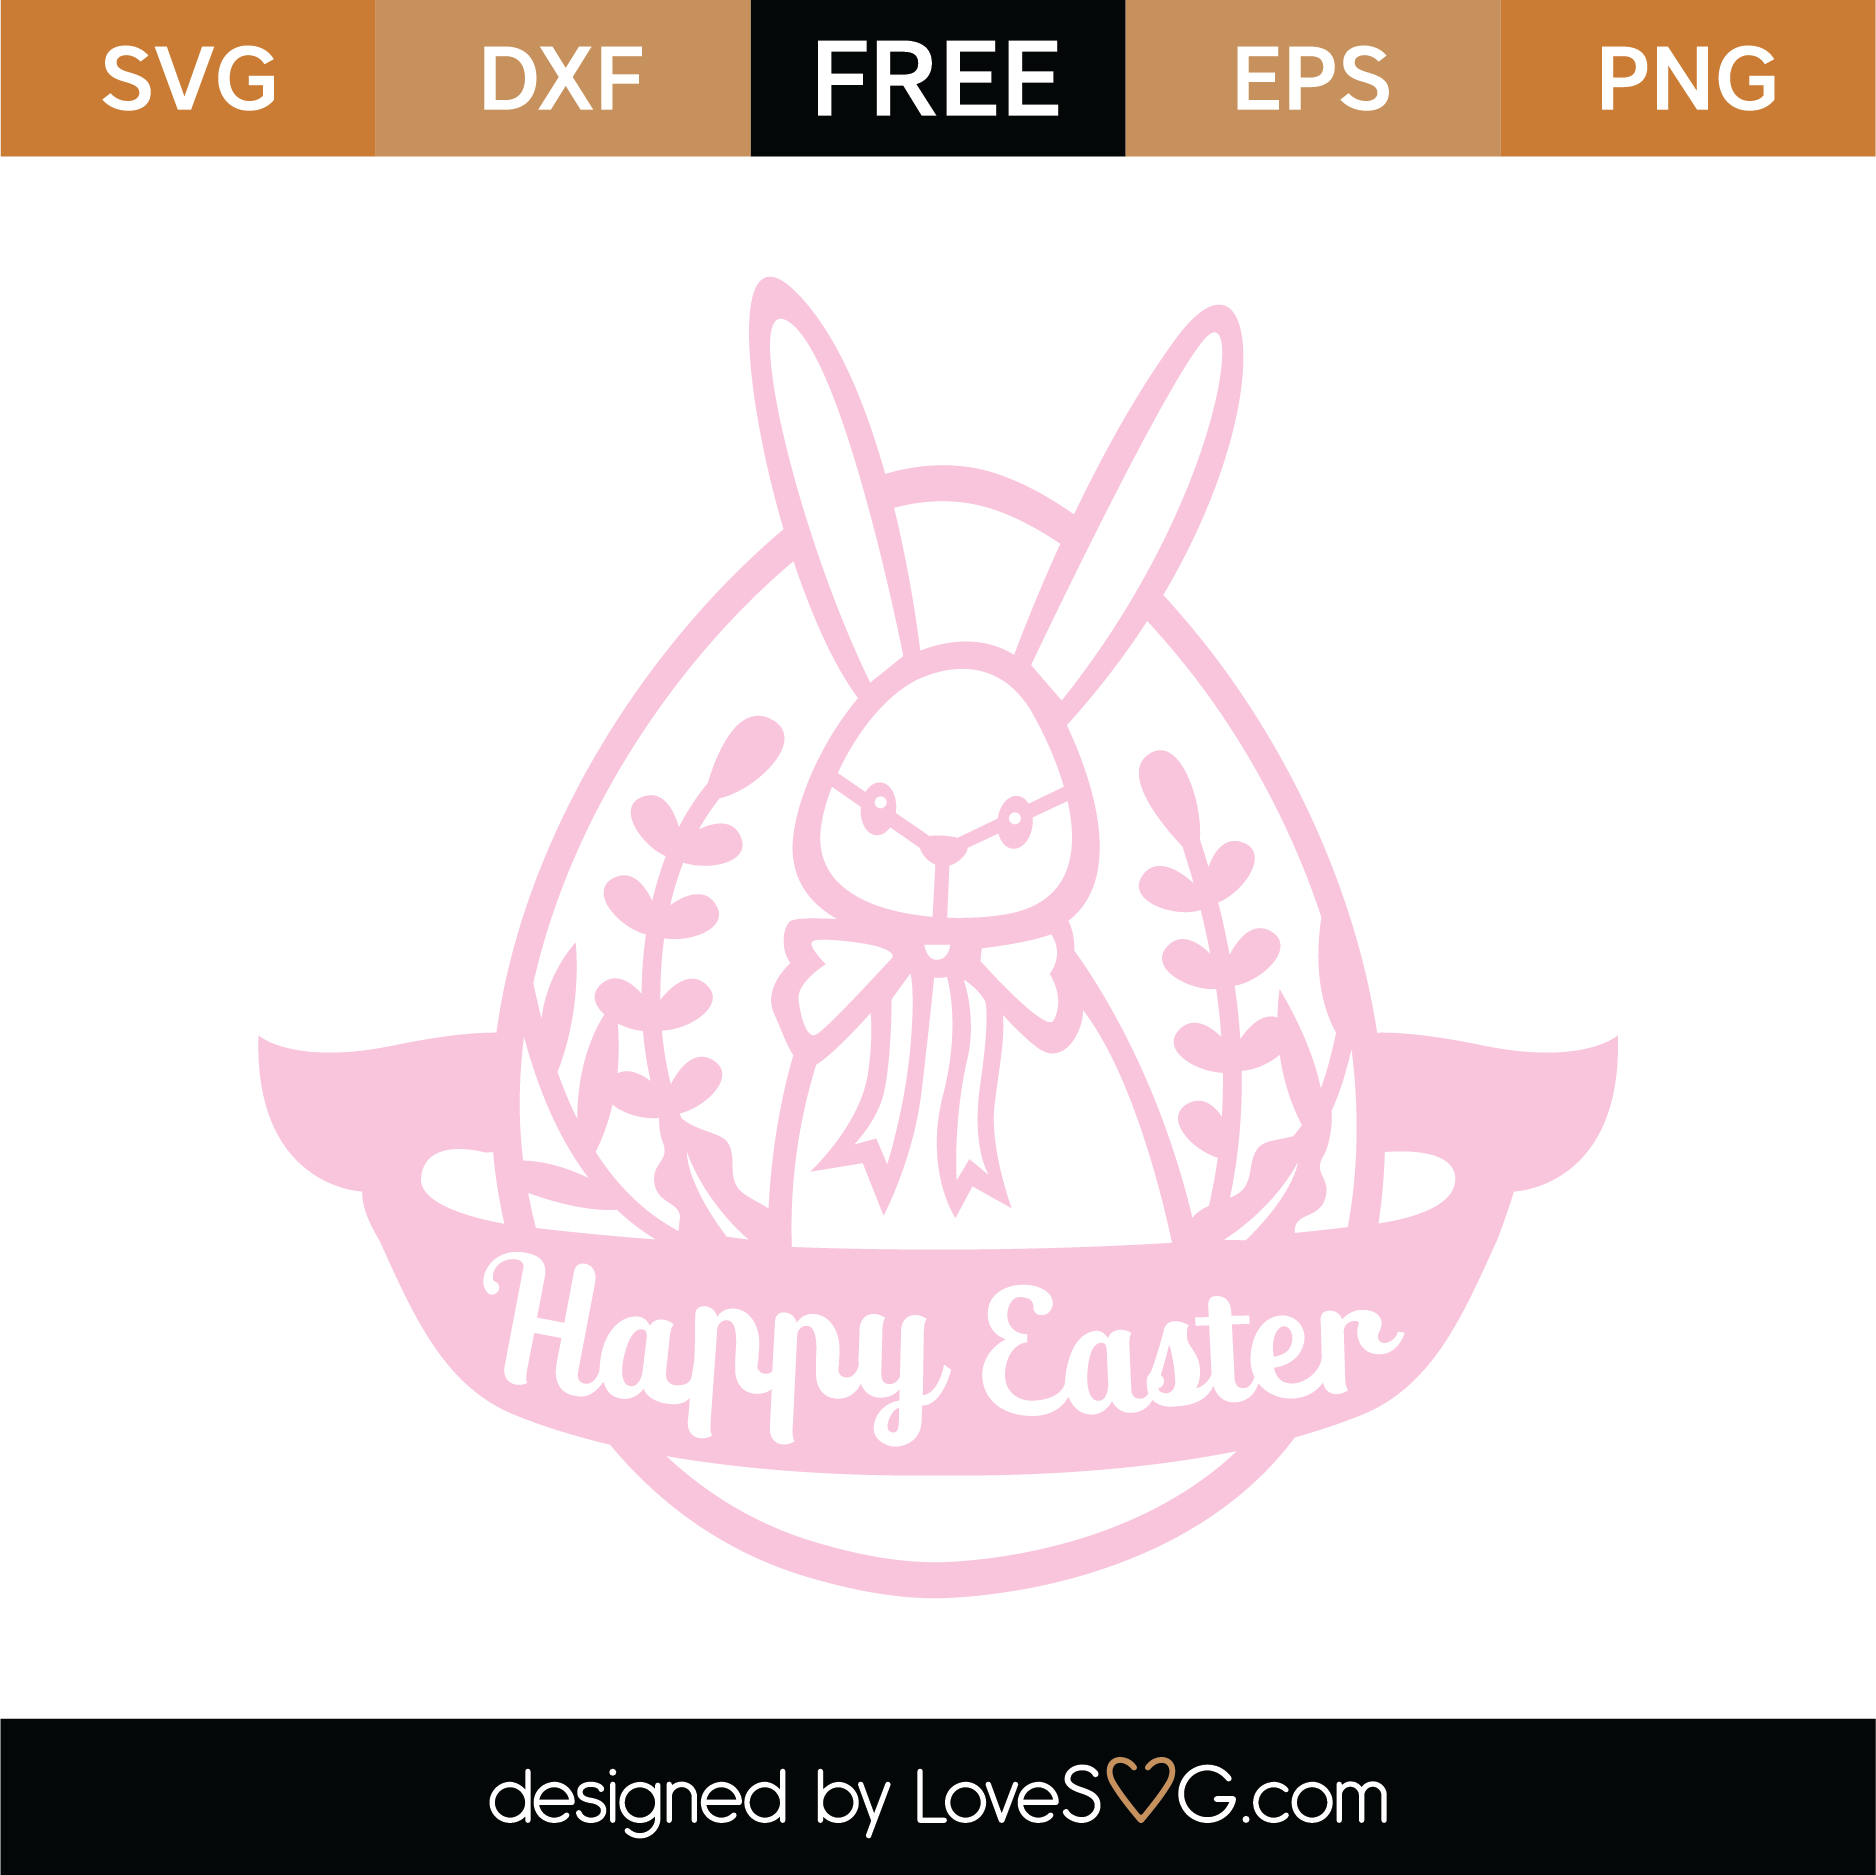 Download Free Happy Easter Monogram SVG Cut File | Lovesvg.com